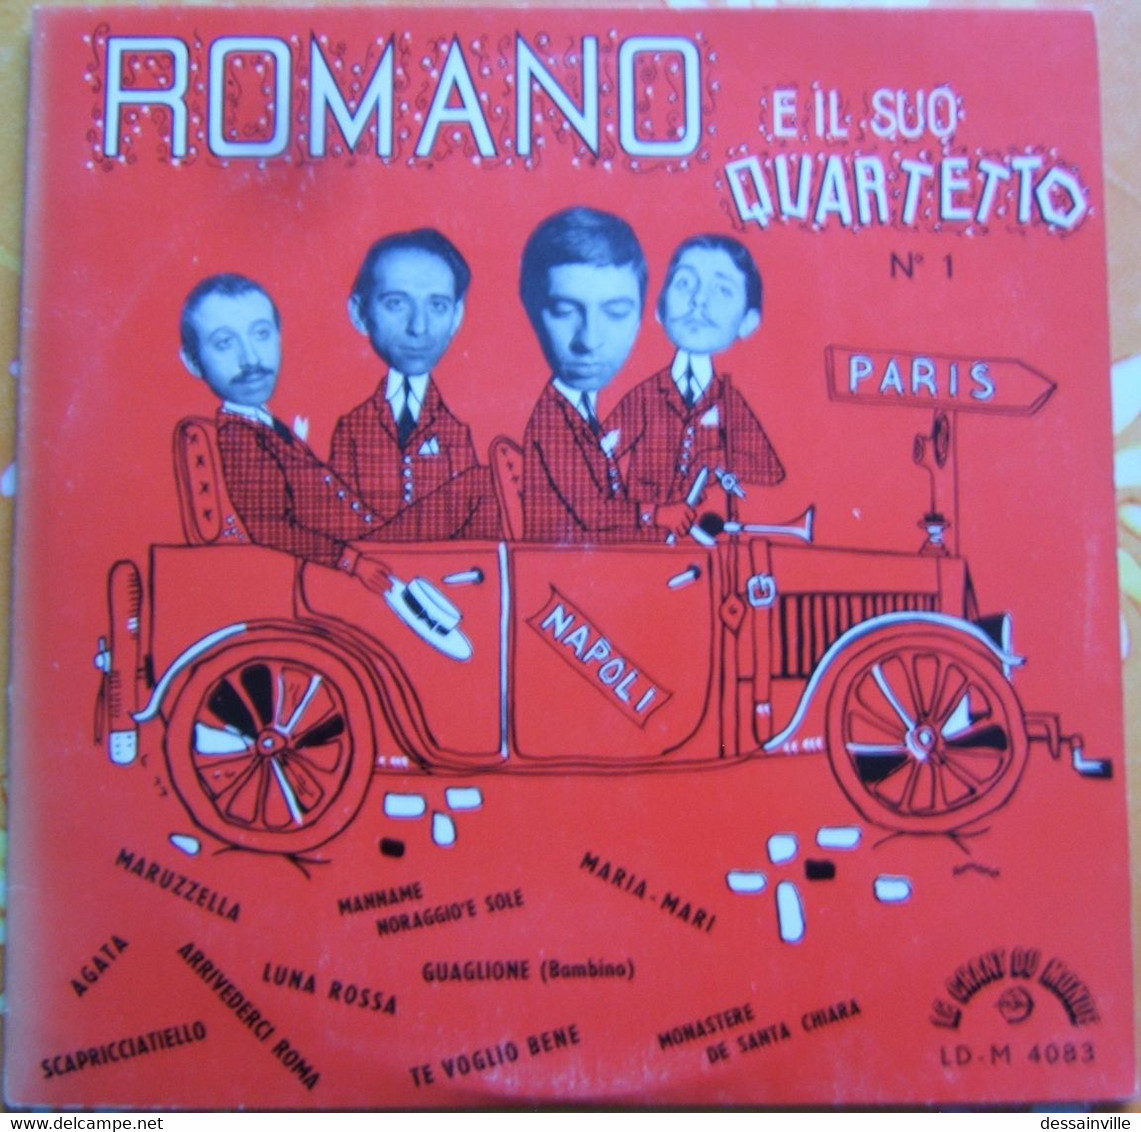 33 Tours 25 Cm - ROMANO E Il Suo Quartetto N° 1 - Autres - Musique Italienne